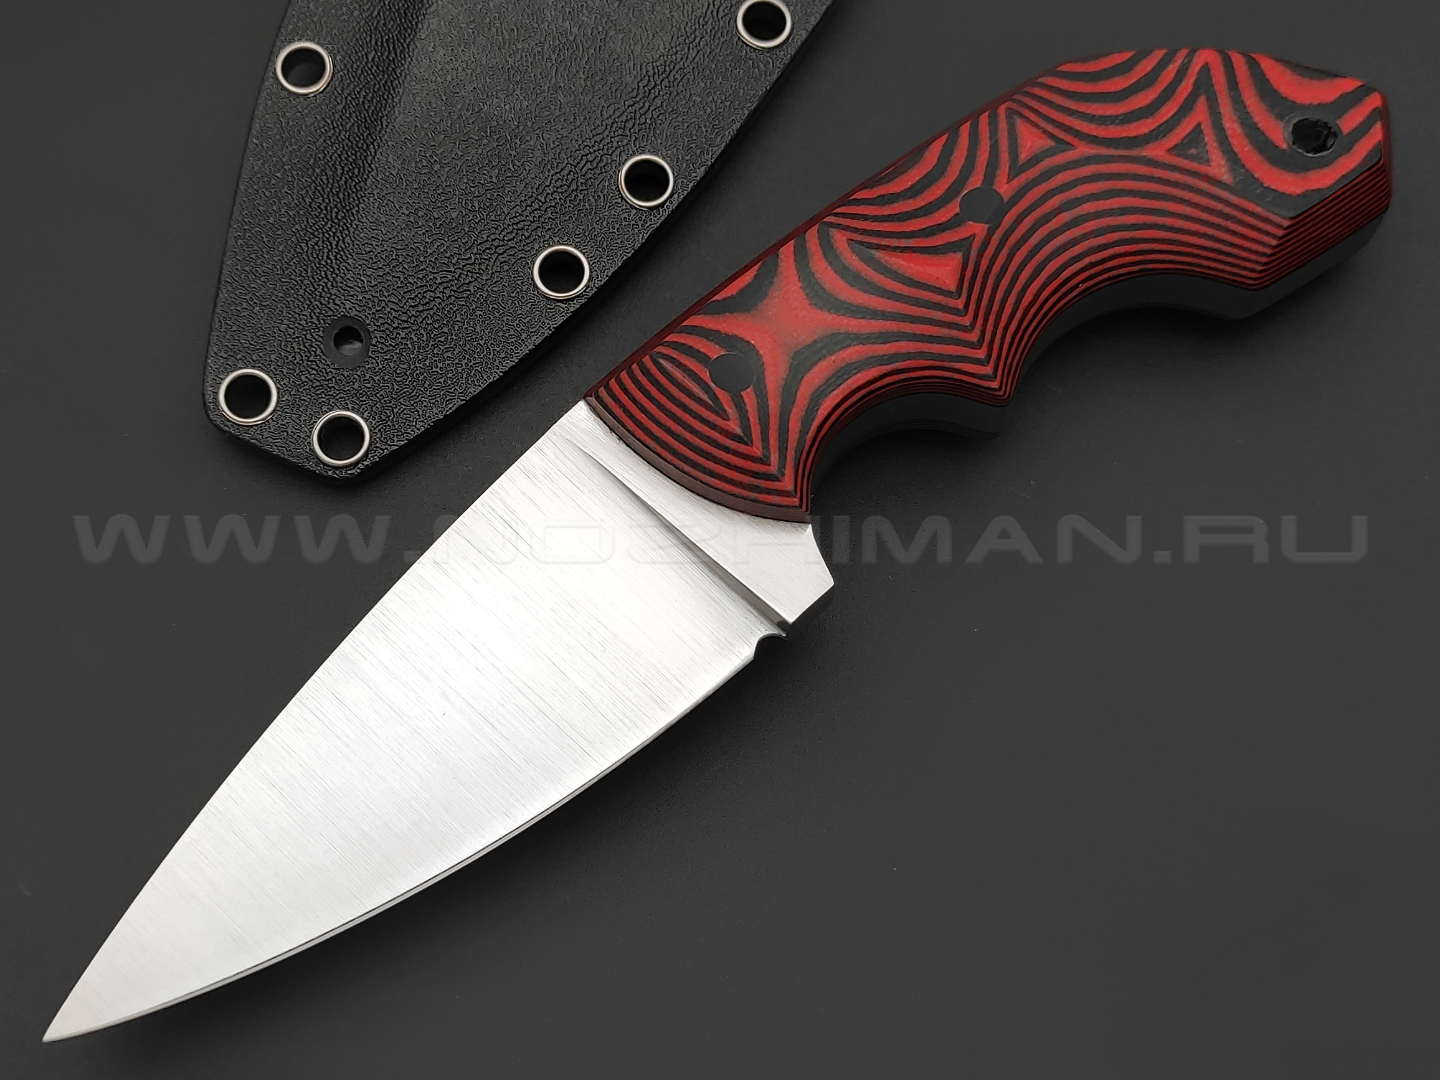 Волчий Век нож Оса Harley Quinn Edition сталь 1.4116 Krupp WA satin, рукоять G10 red & blue